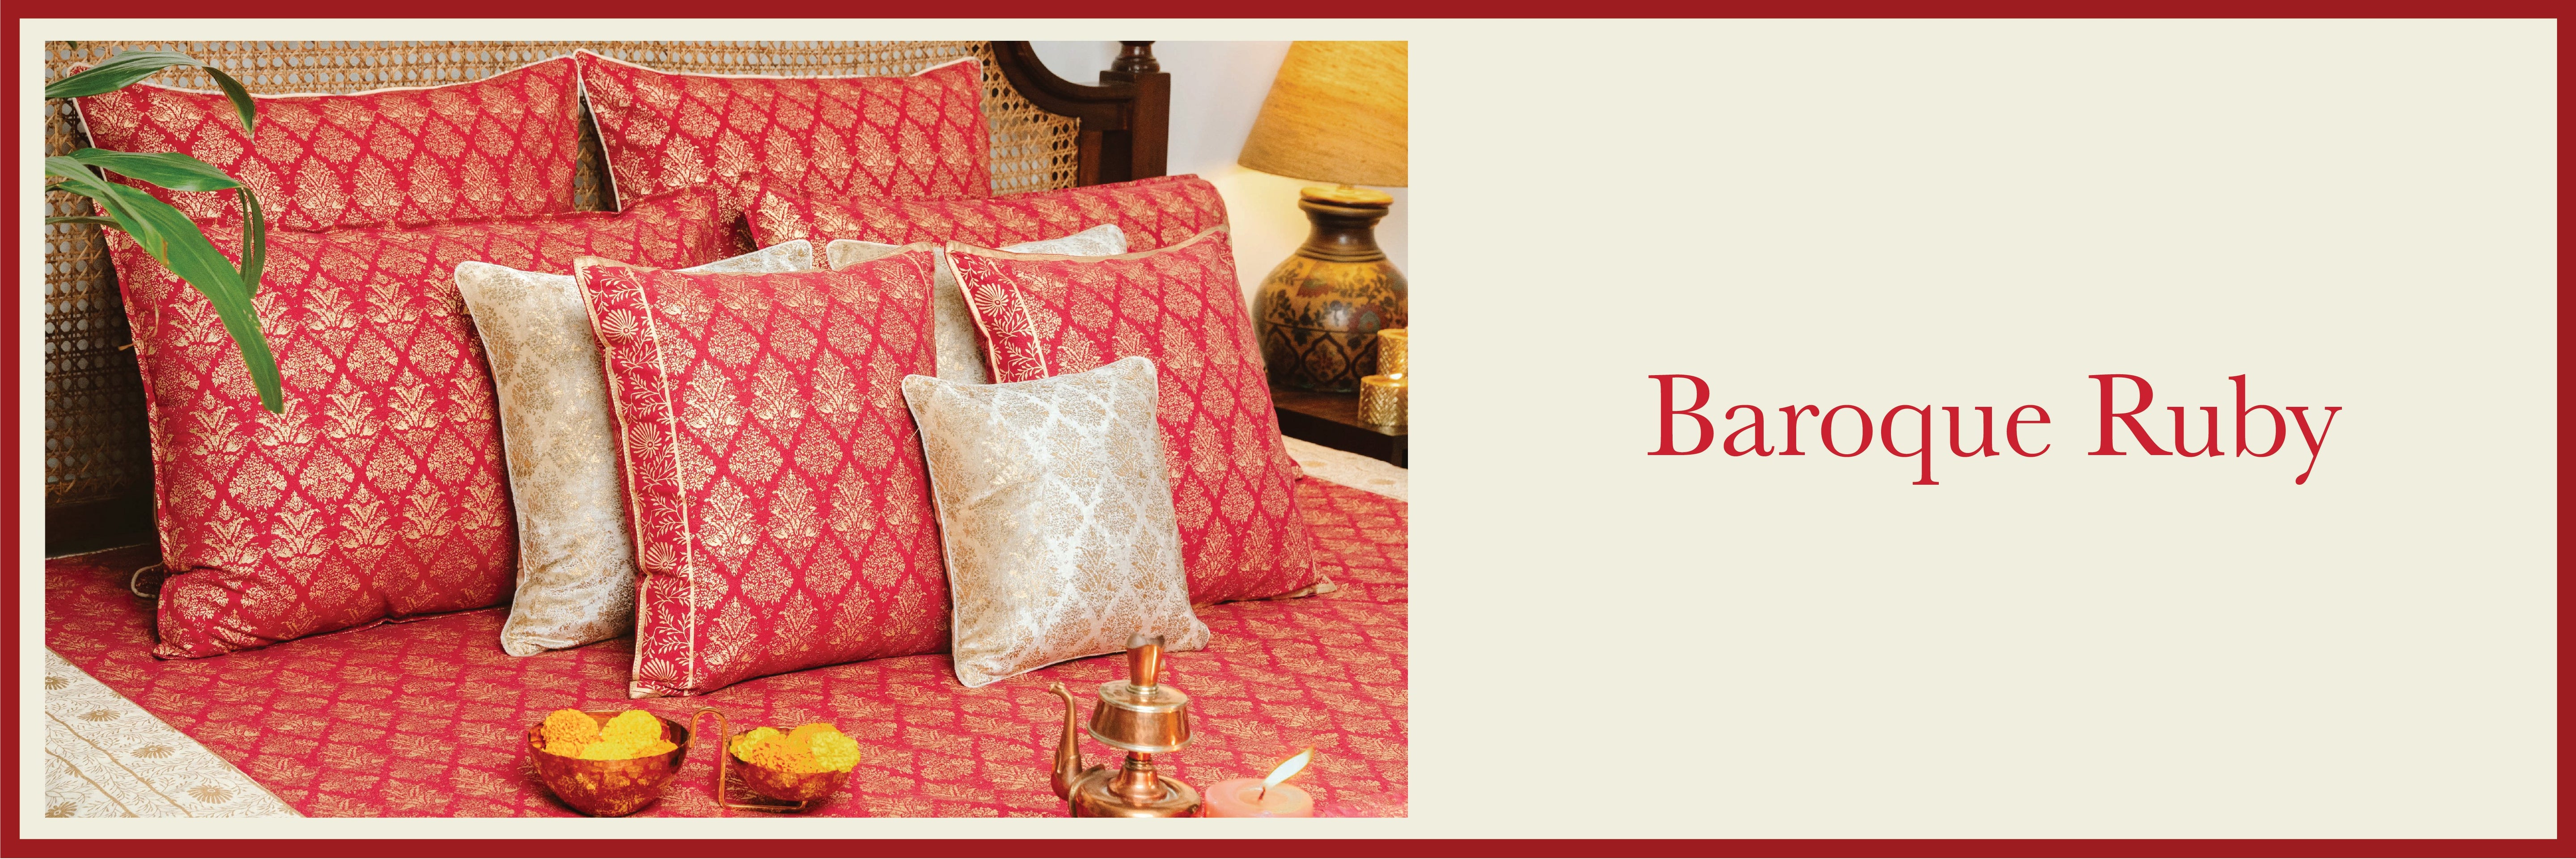 Baroque Ruby - Bedroom Collection